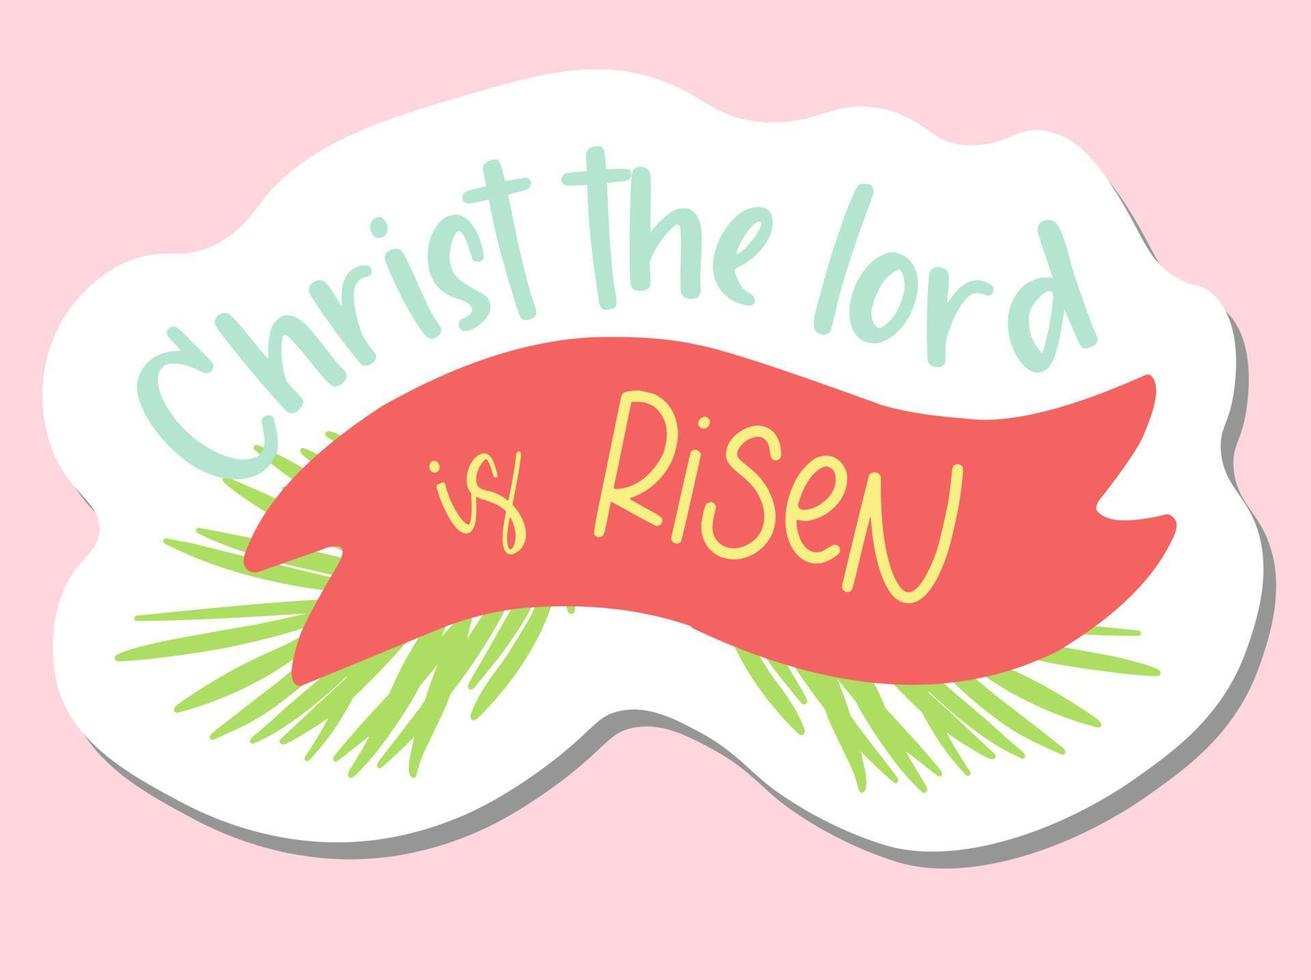 Jesus Christ is risen. Christianity. Easter Monday. vector